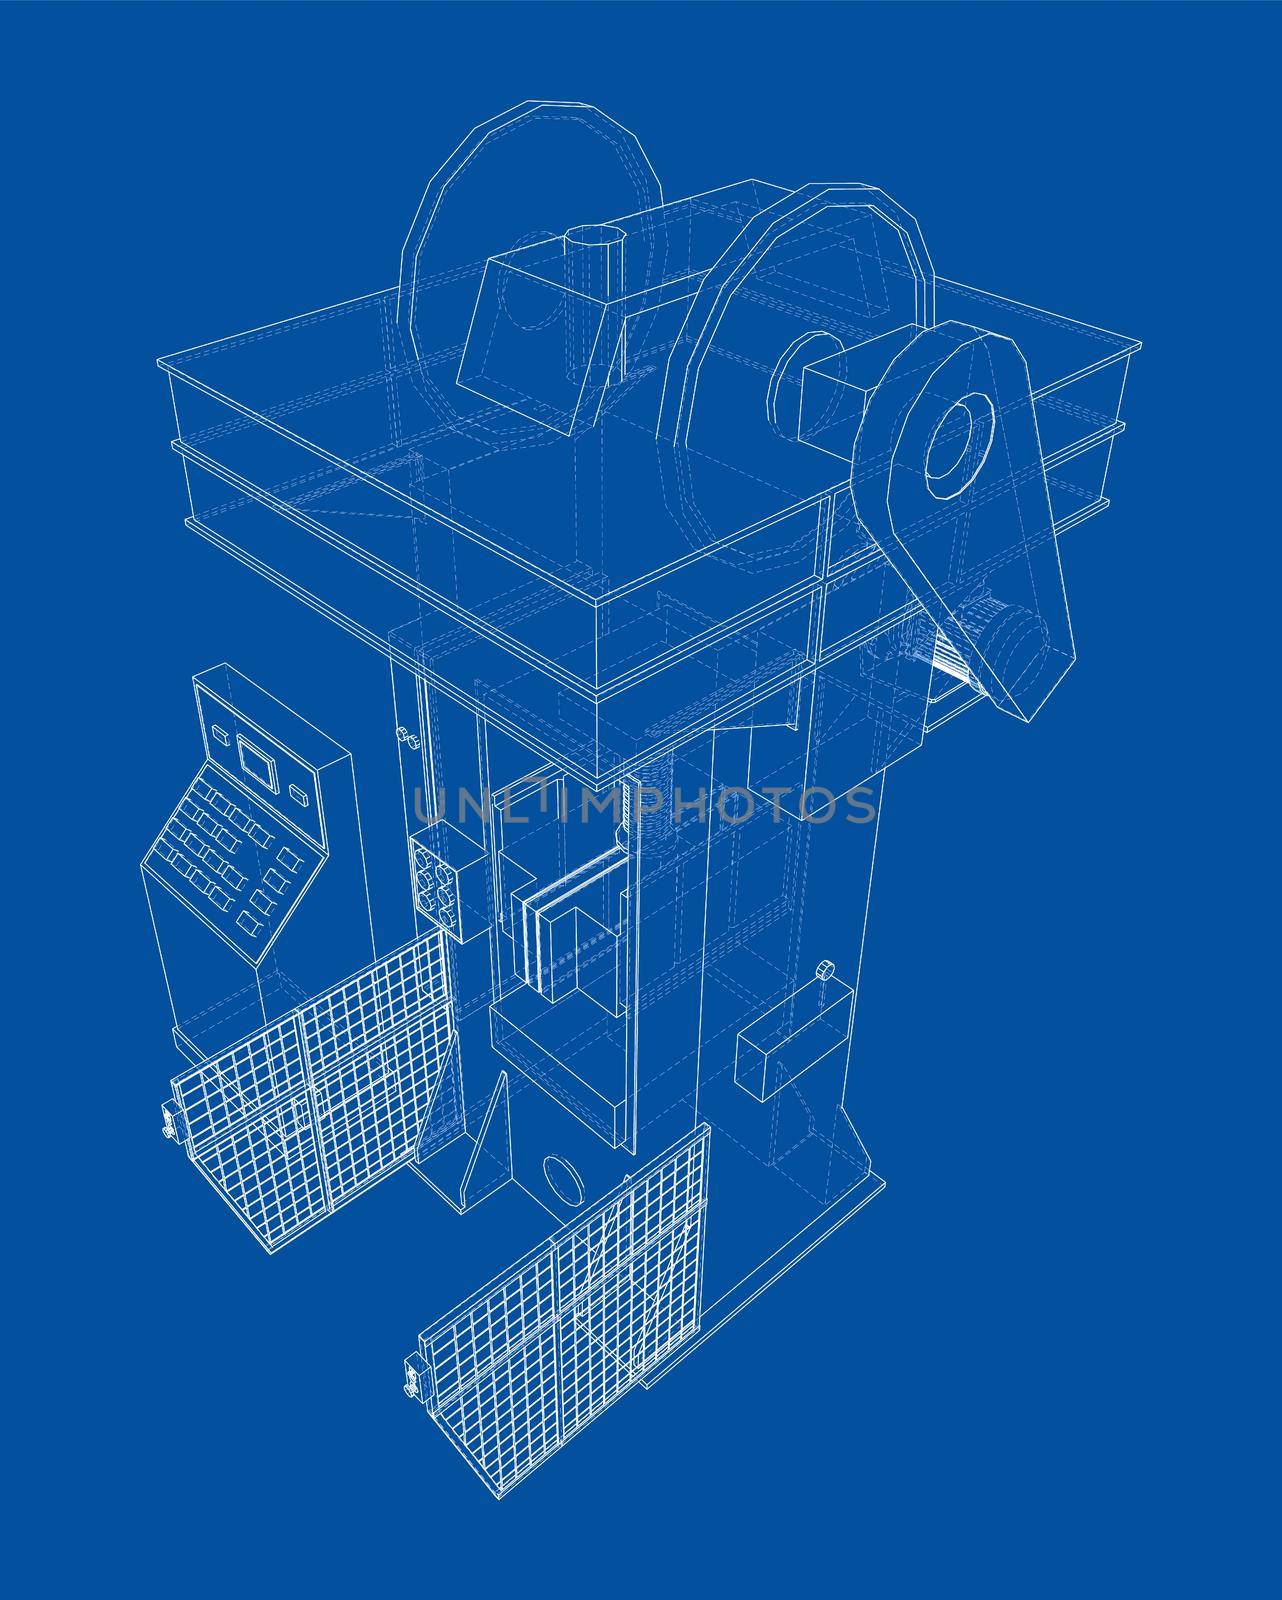 Hydraulic Press. 3d illustration by cherezoff